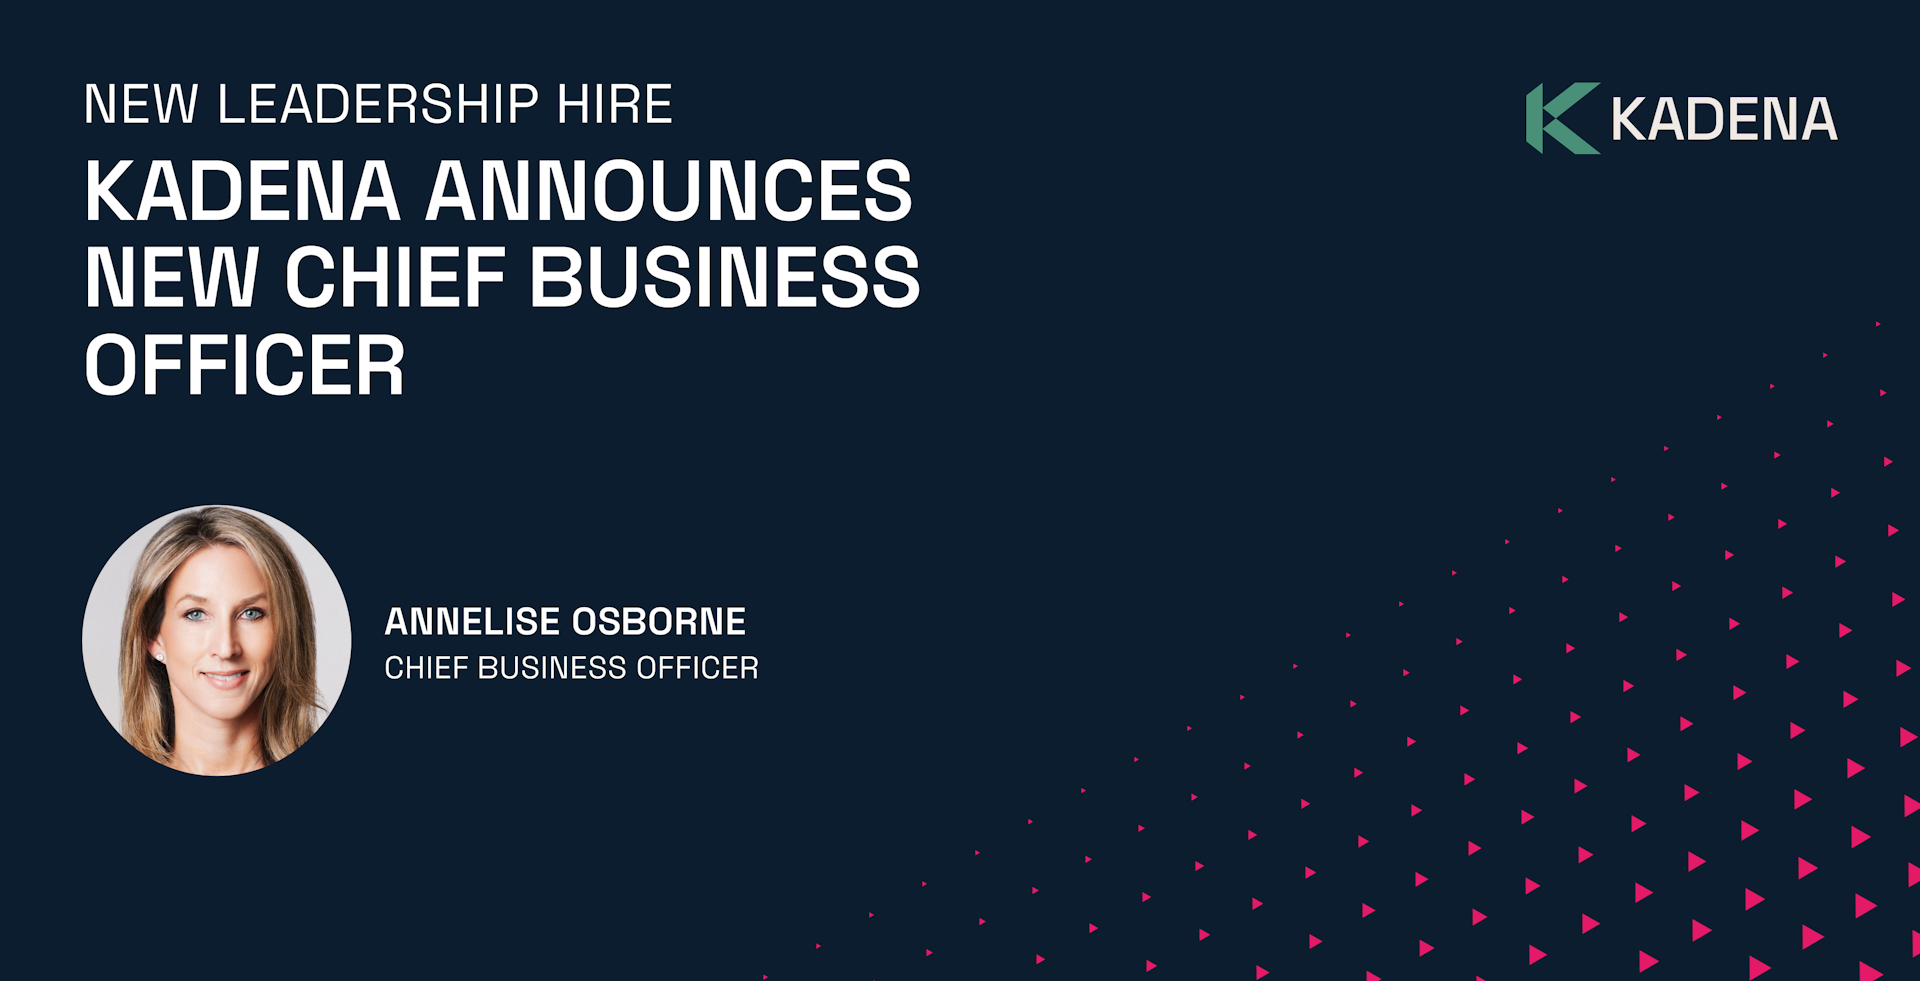 New Leadership Hire: Kadena Announces Annelise Osborne as Chief Business Officer 